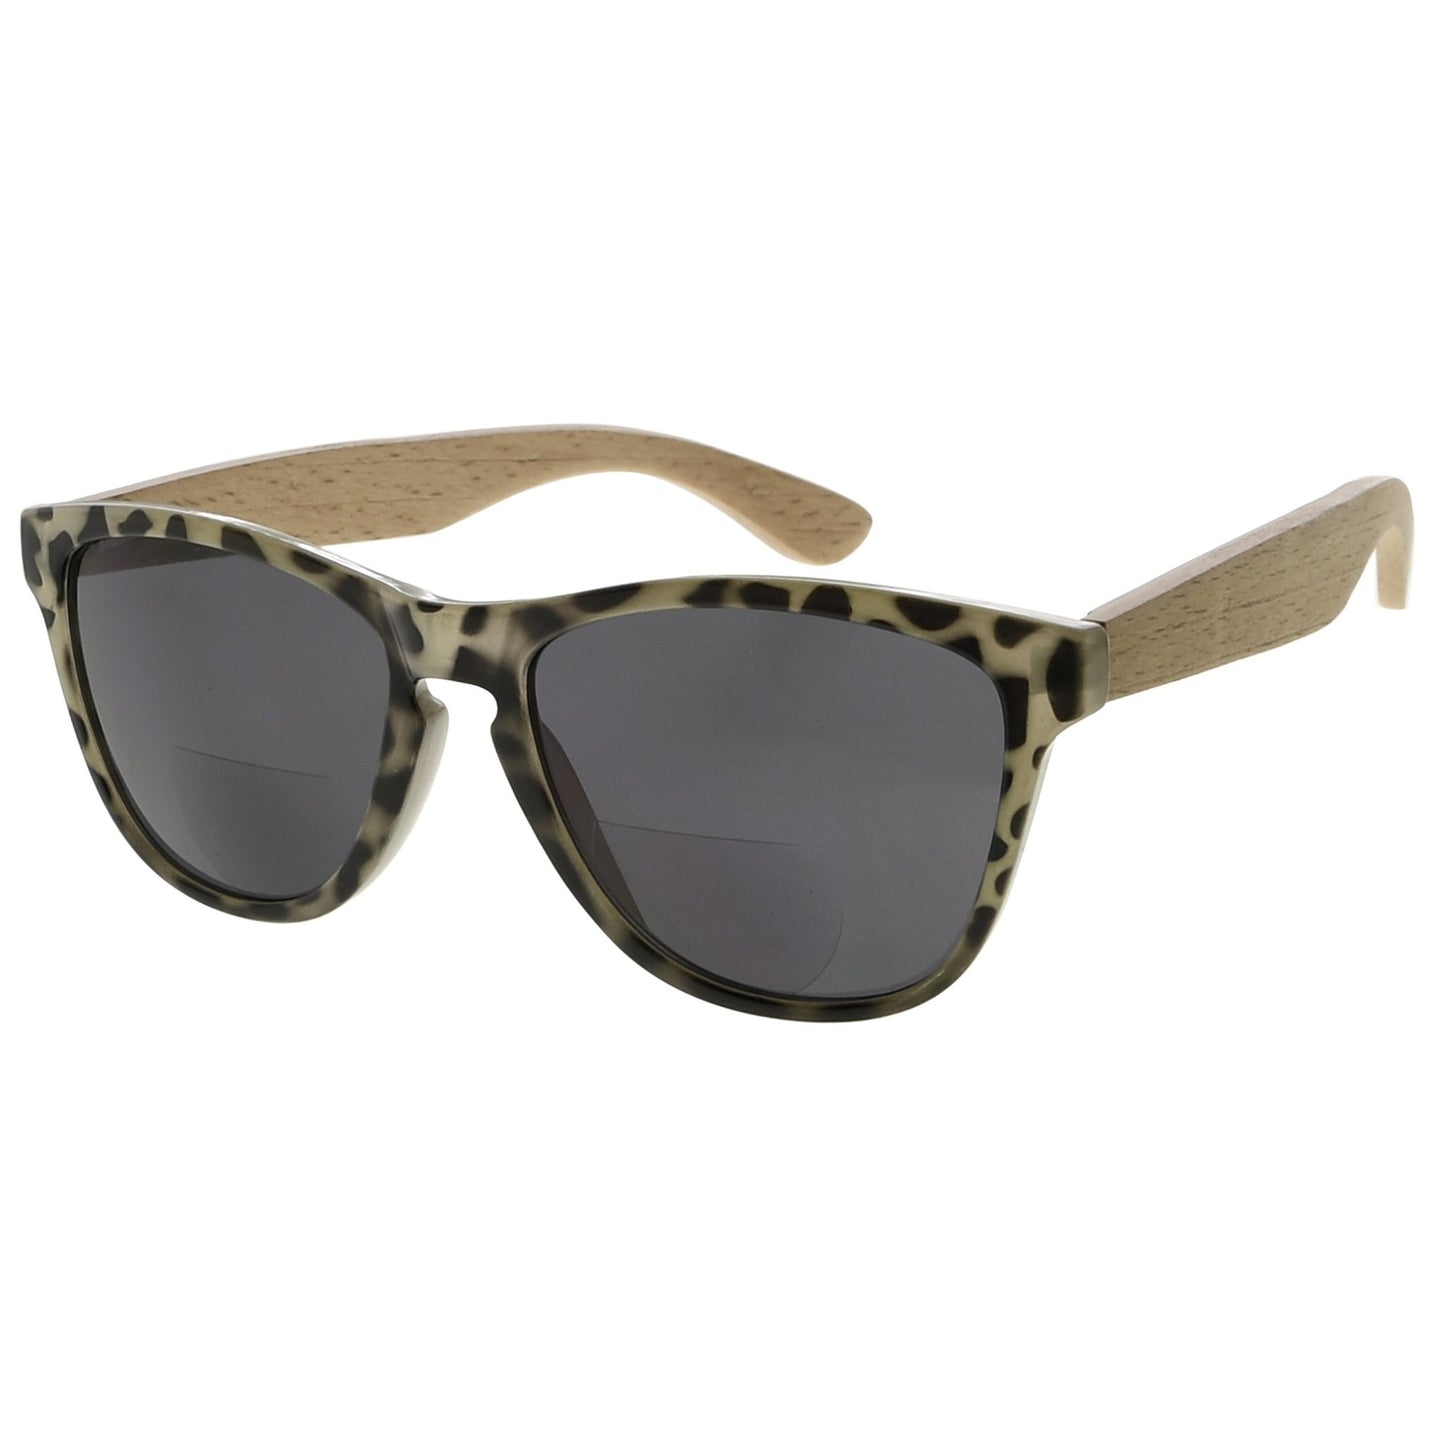 Oval Bifocal Sunglasses Beige Tortoise SGH001-6